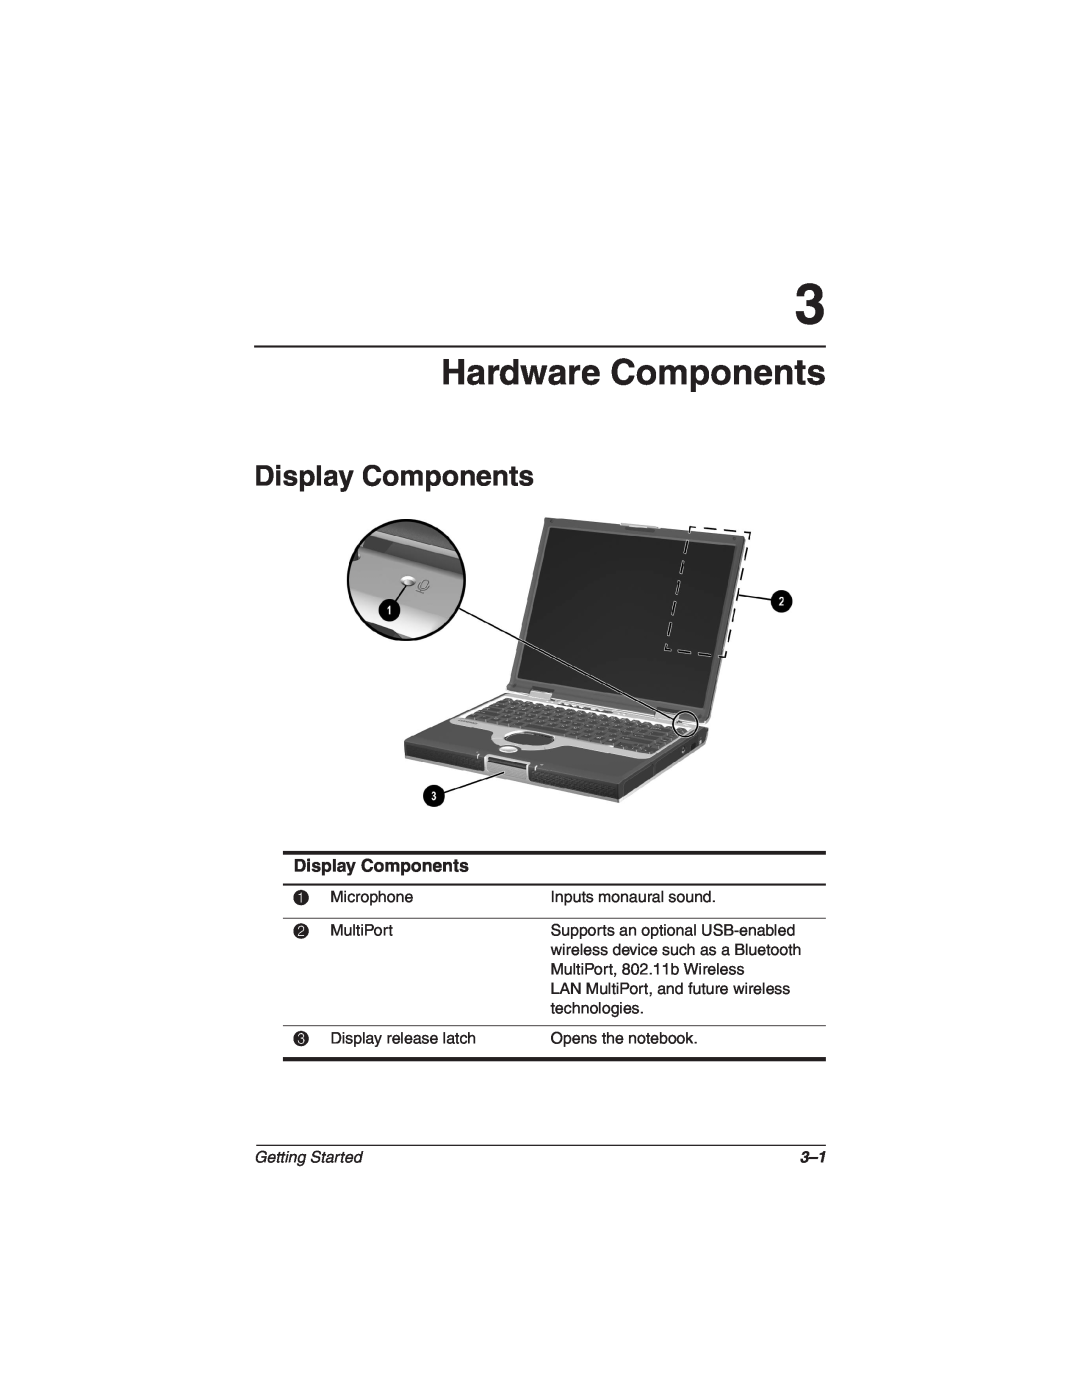 HP 1555AP, 1565AP, 1545AP, 1540AP, 1550AP, 1535AP, 1527EA, 1525CA manual Hardware Components, Display Components, Getting Started 